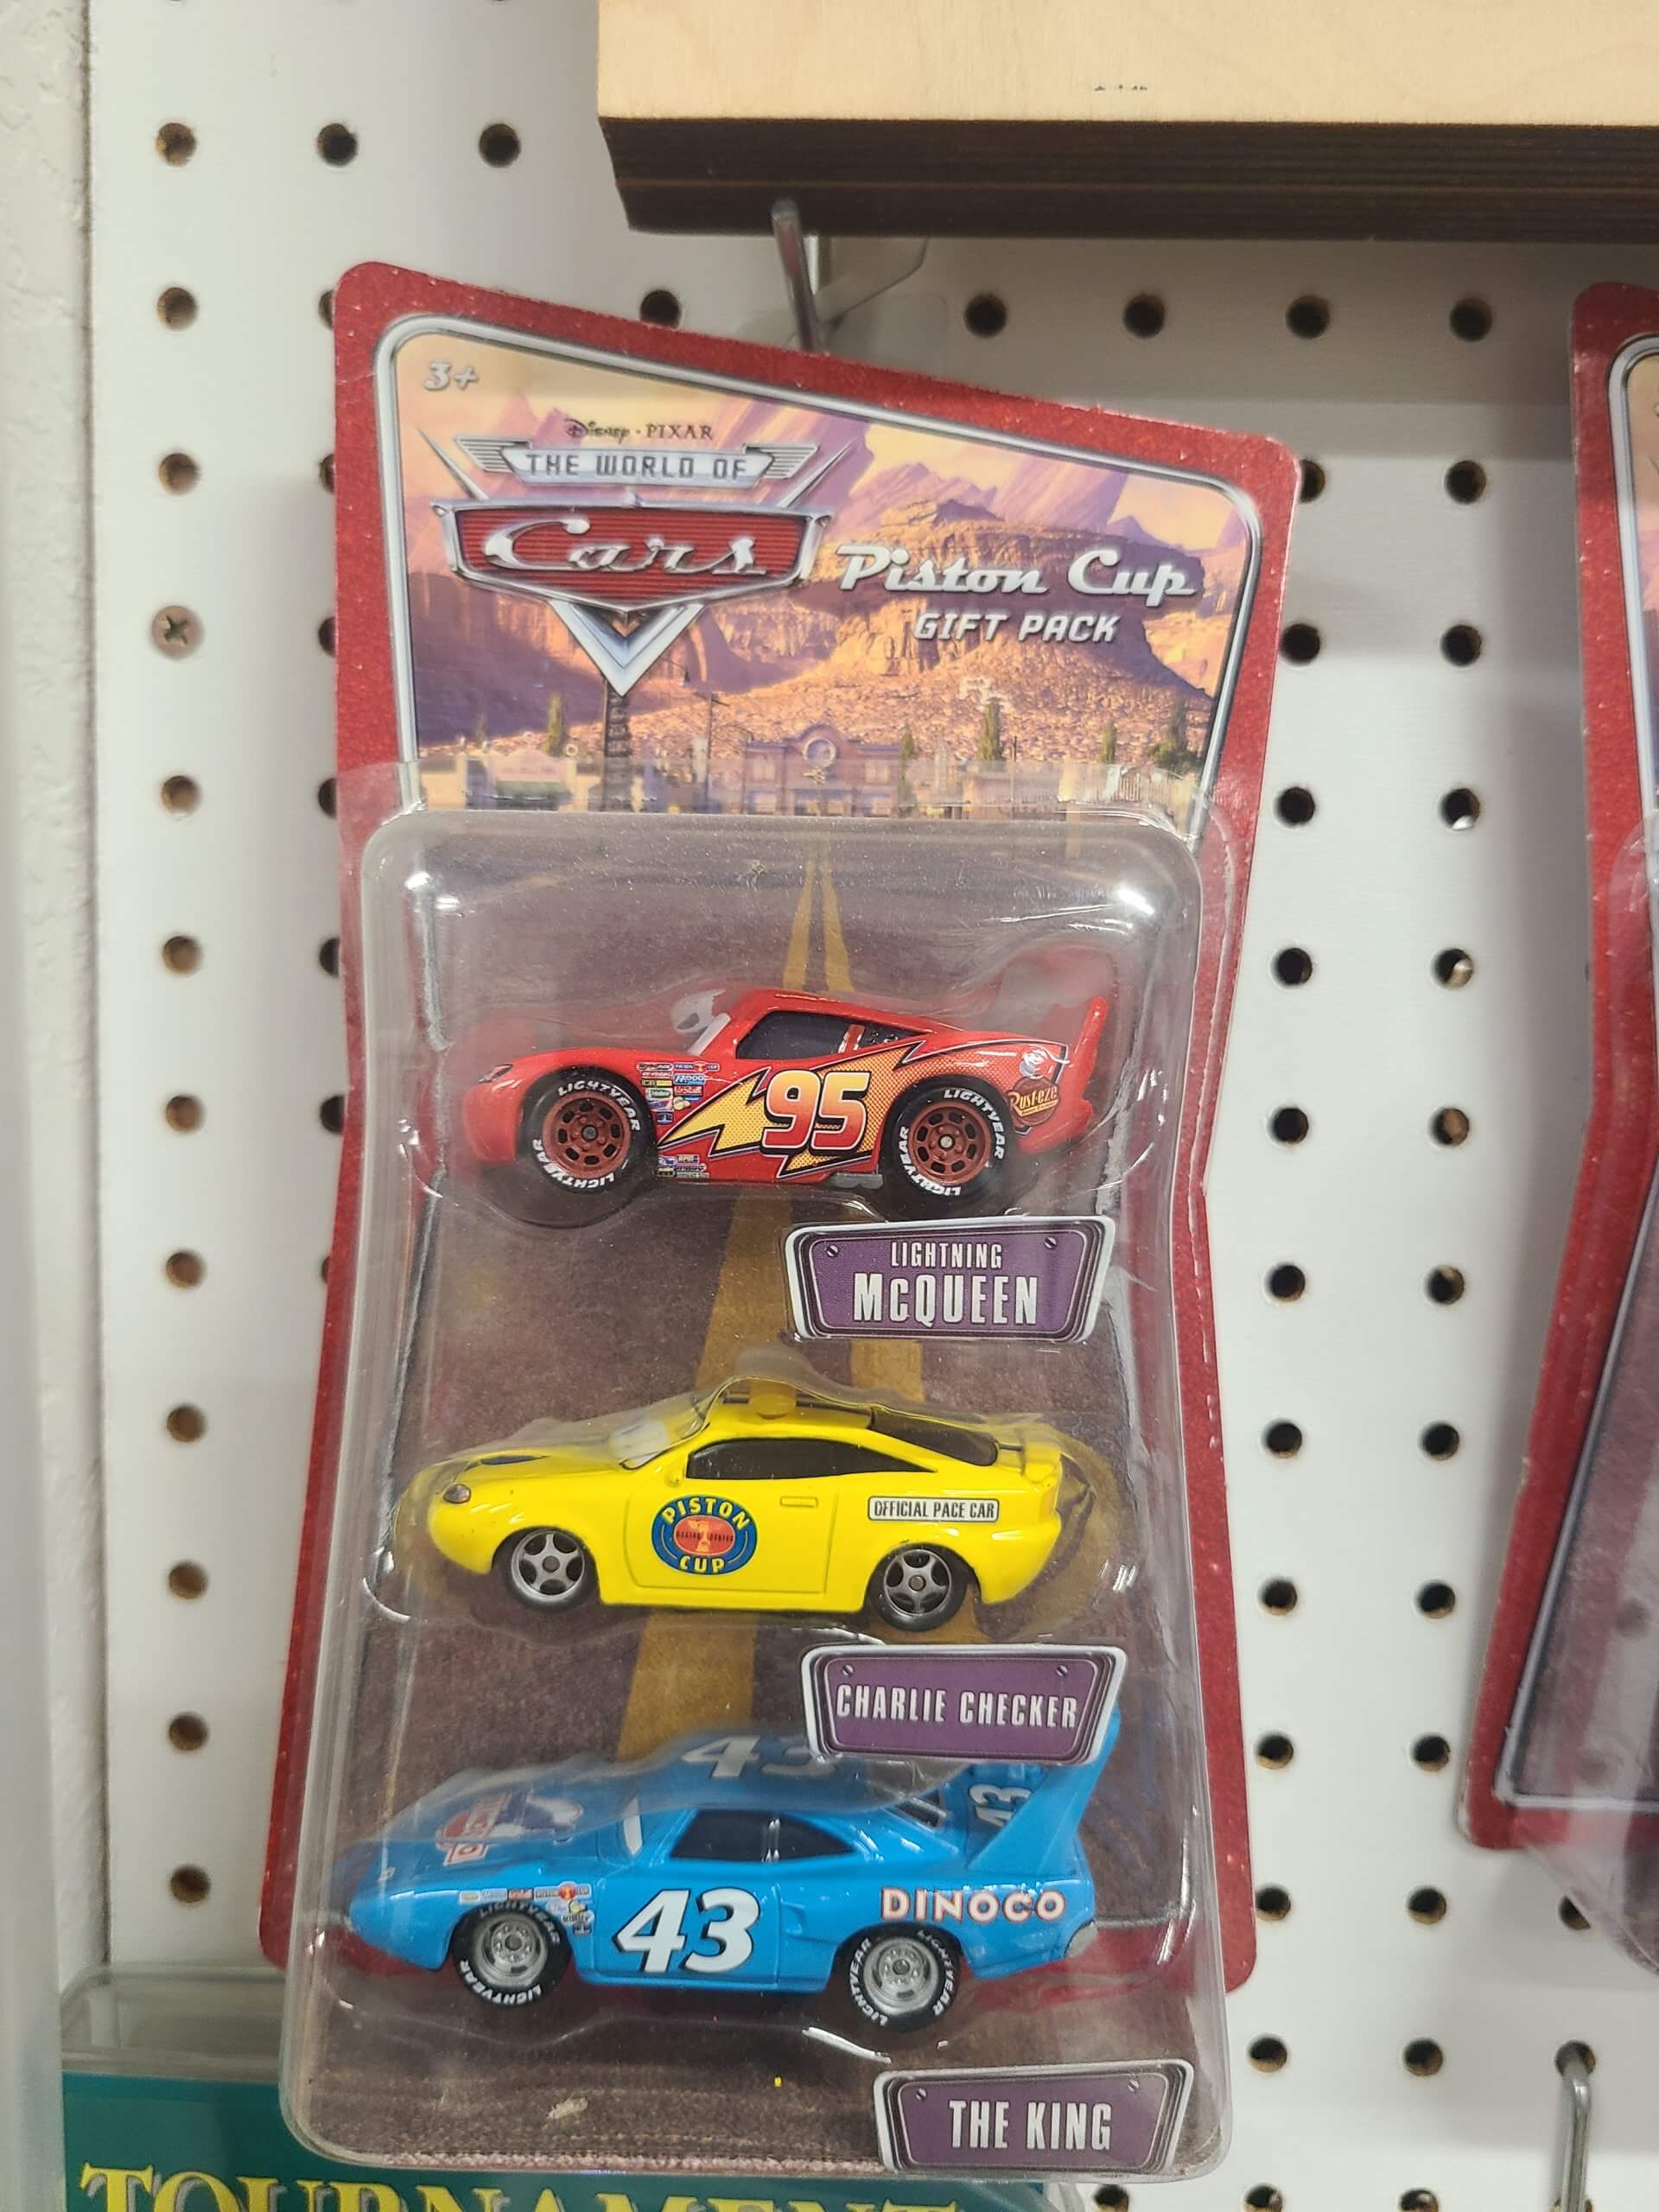 Blister Packaging For Toy Cars & Blister Pack Hot Wheels